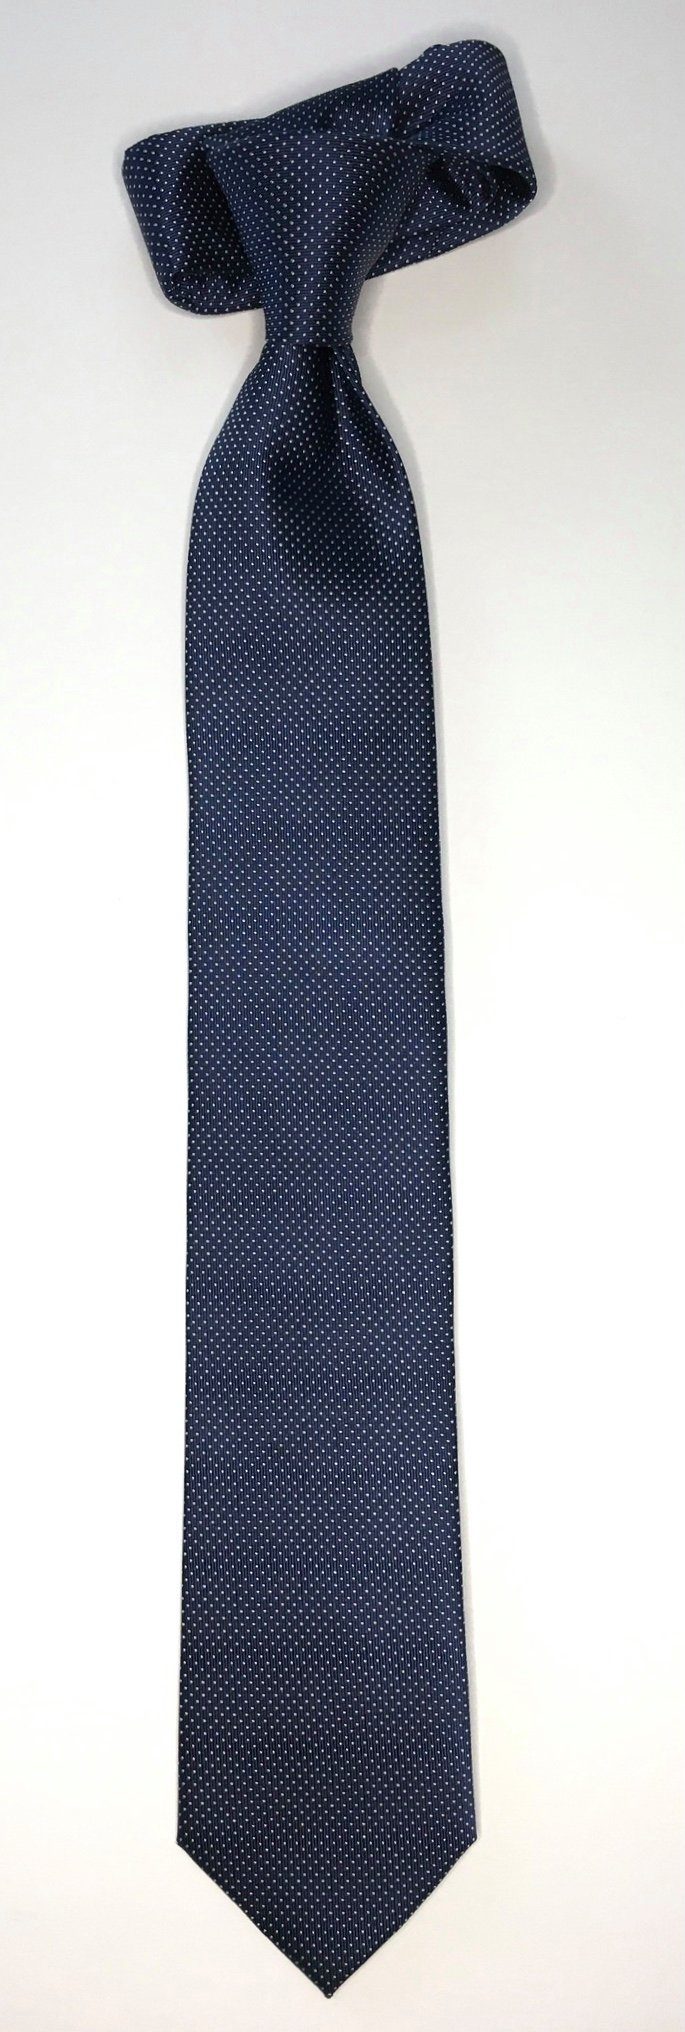 Seidenfalter Krawatte Seidenfalter 6cm Krawatte Picoté Dunkelblau Design edlen Seidenfalter Picoté Krawatte im